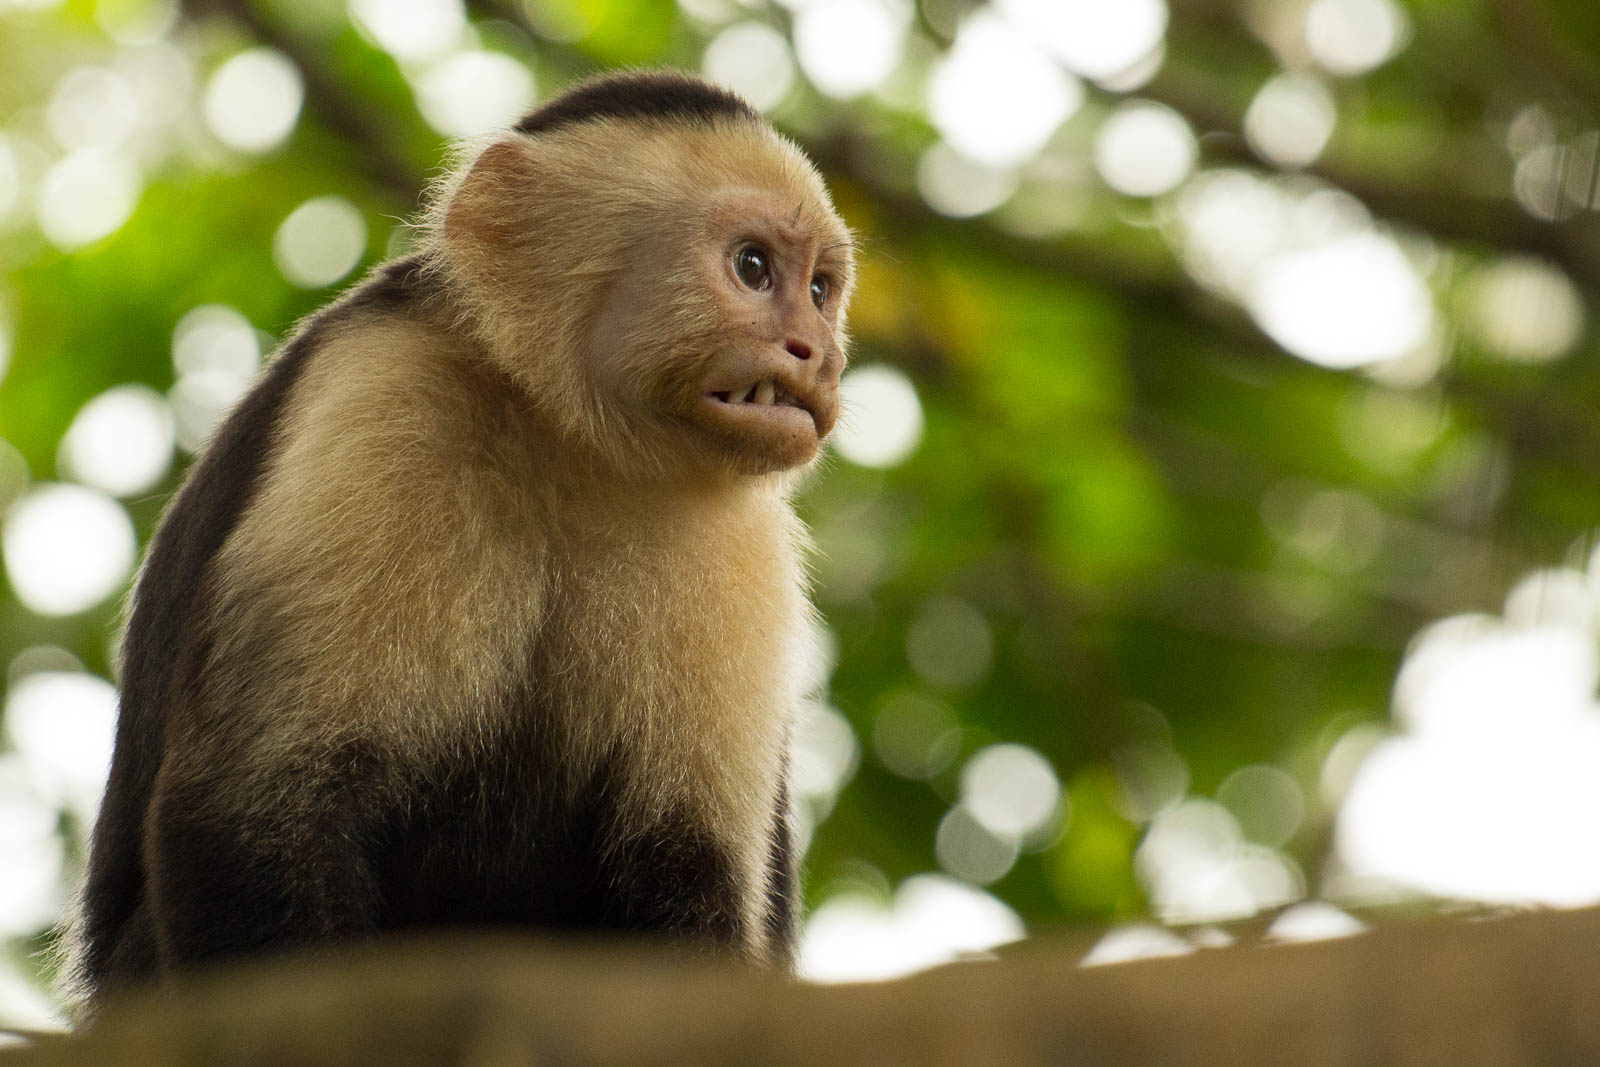 White faced capuchin monkeys